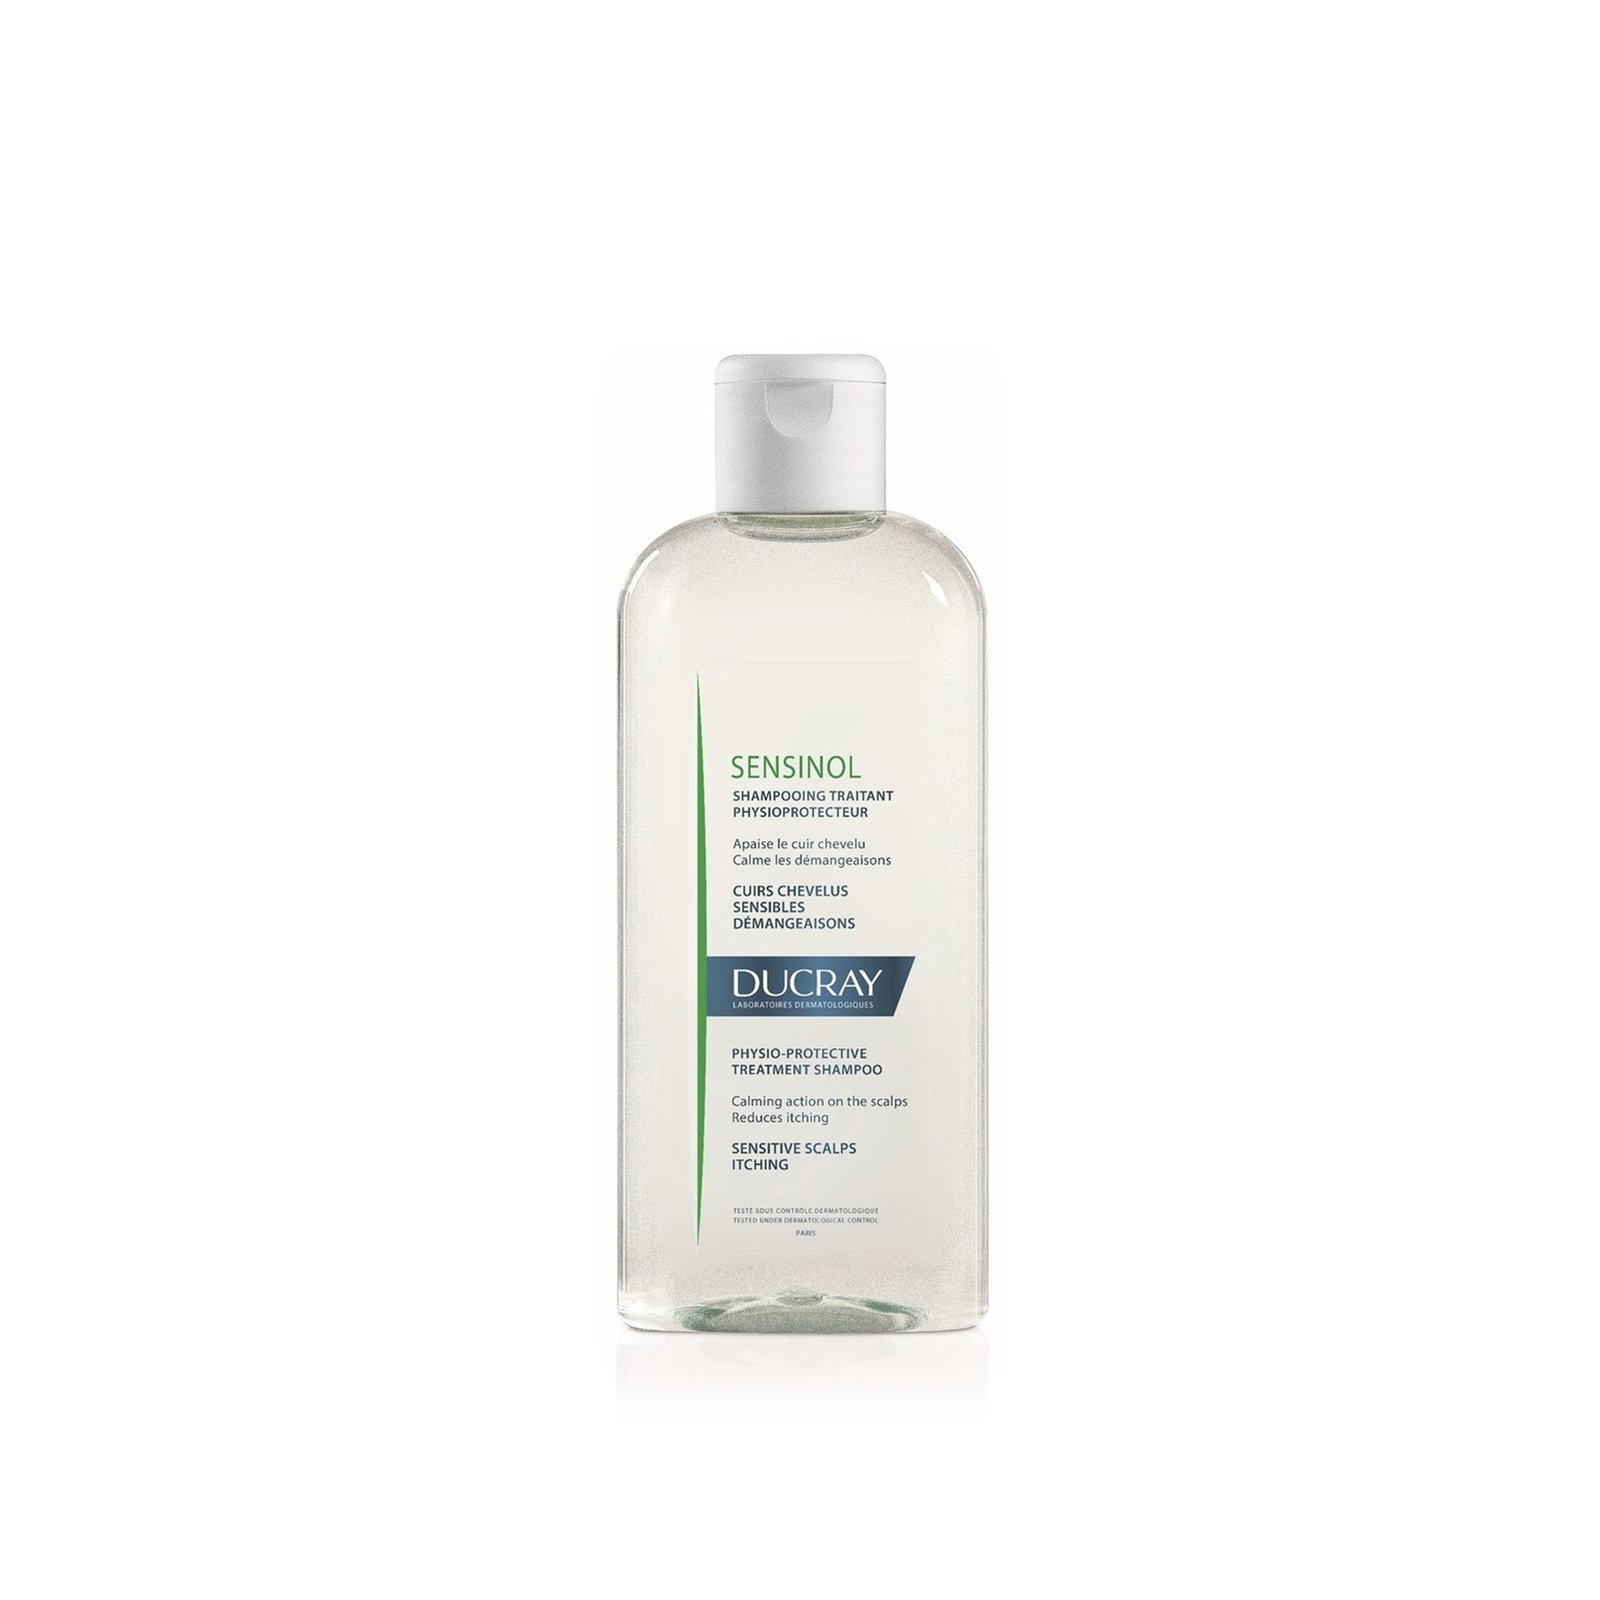 Ducray Sensinol Physio-Protective Treatment Shampoo 200ml (6.76fl oz)